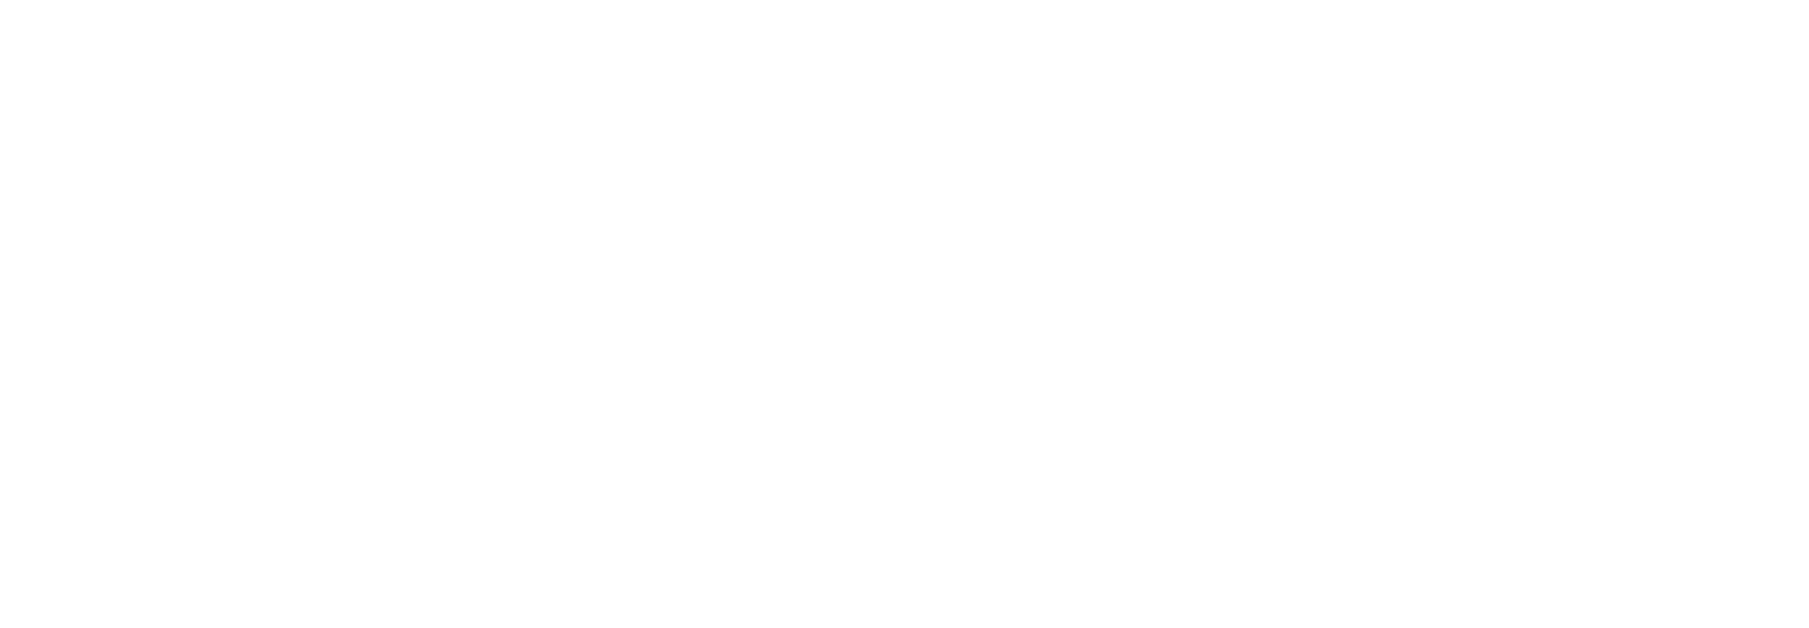 WRI logo